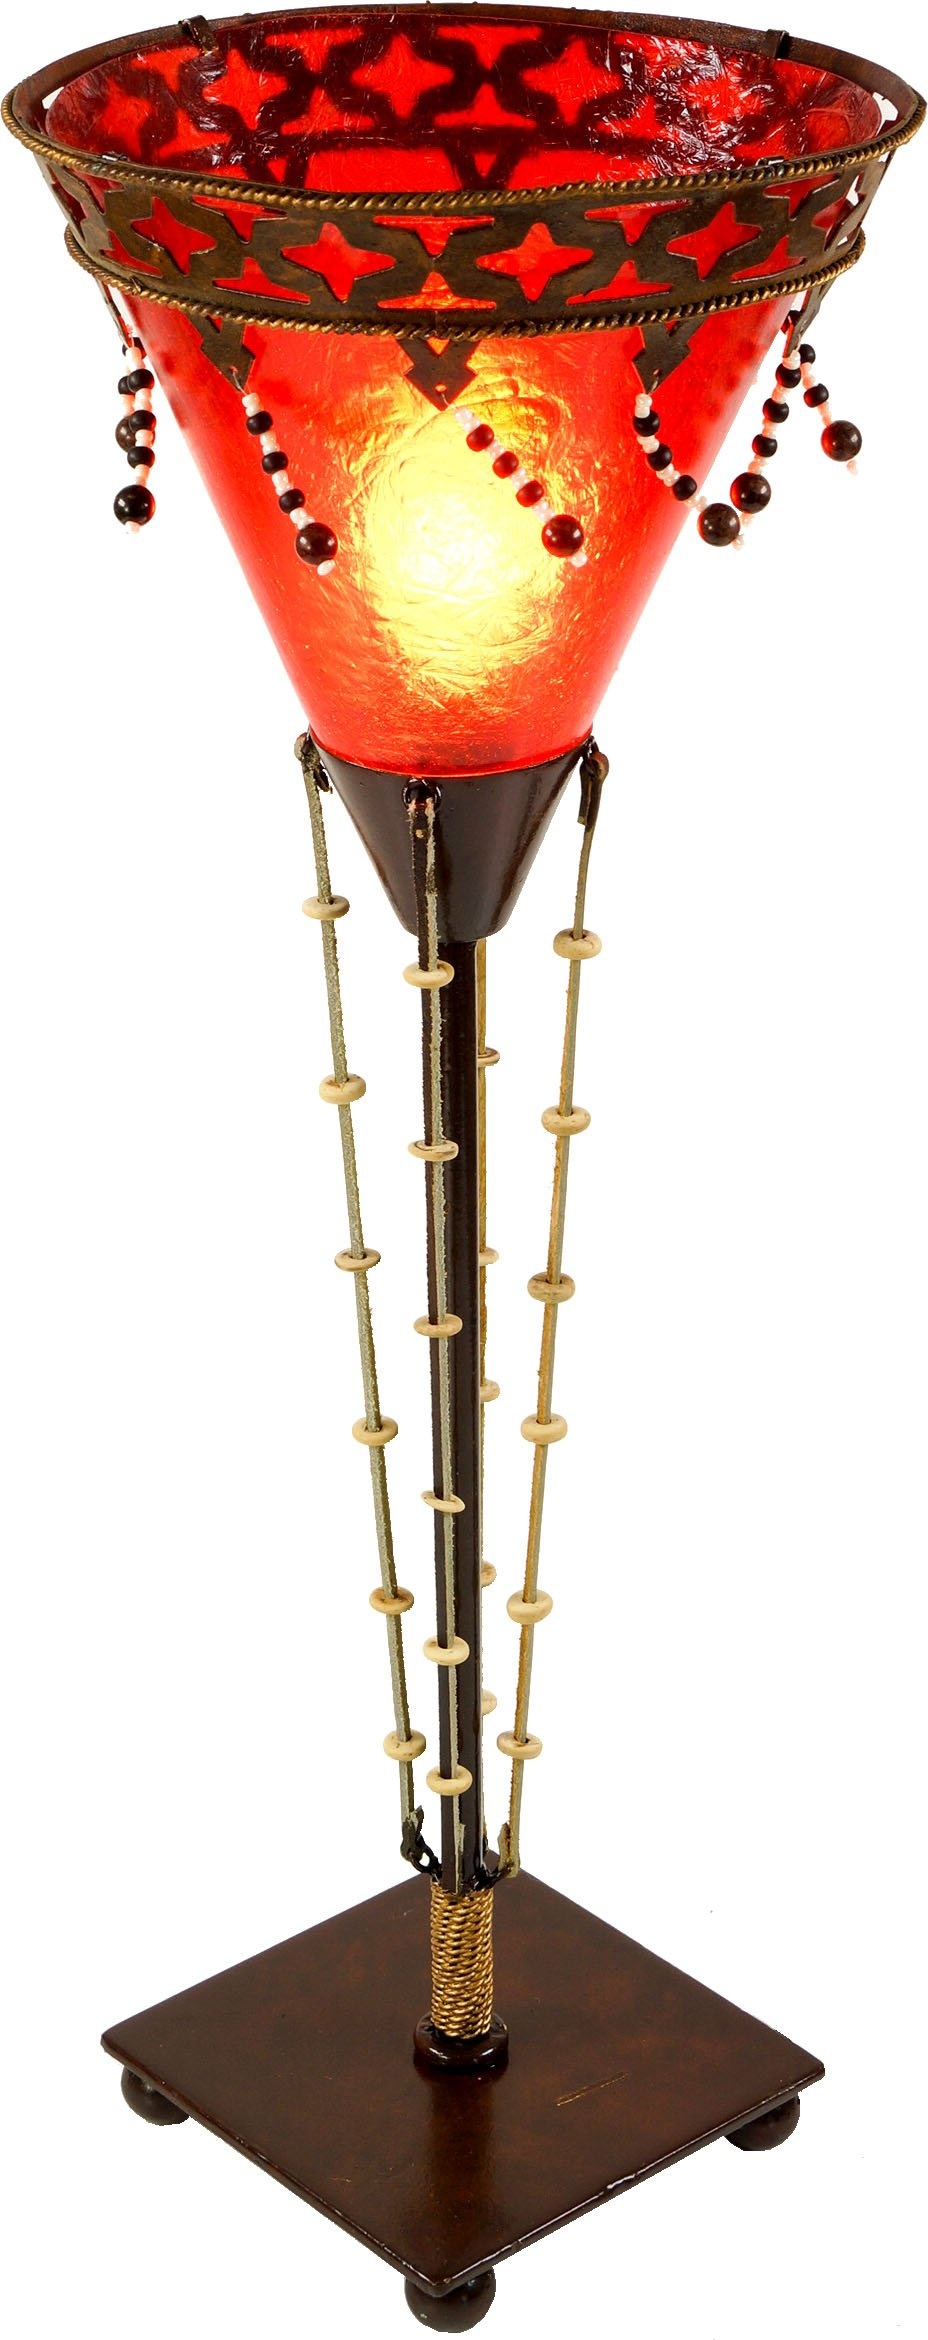 GURU SHOP Tischleuchte Kokopelli - Balat Rot, Fiberglas, 50x18x18 cm, Bunte, Exotische Tischlampen